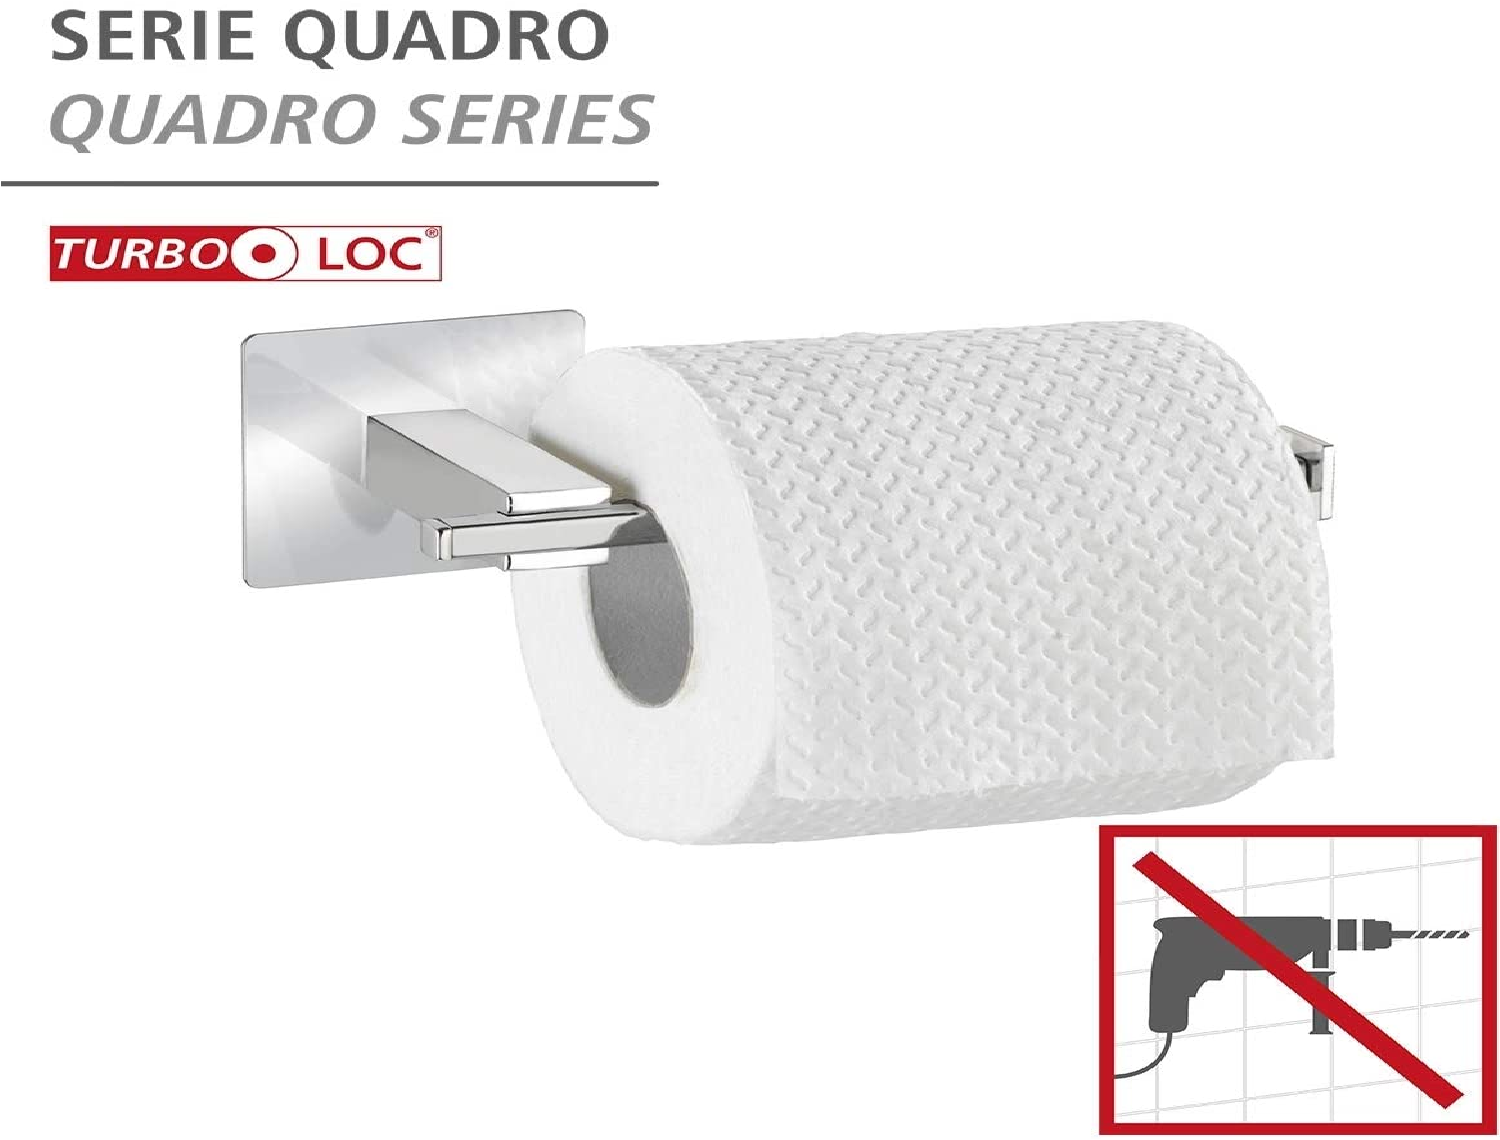 Turbo-Loc® Edelstahl Toilettenpapierhalter ohne Deckel Quadro - Befestigen ohne bohren, Edelstahl rostfrei, 16.5 x 6.5 x 7 cm, Chrom